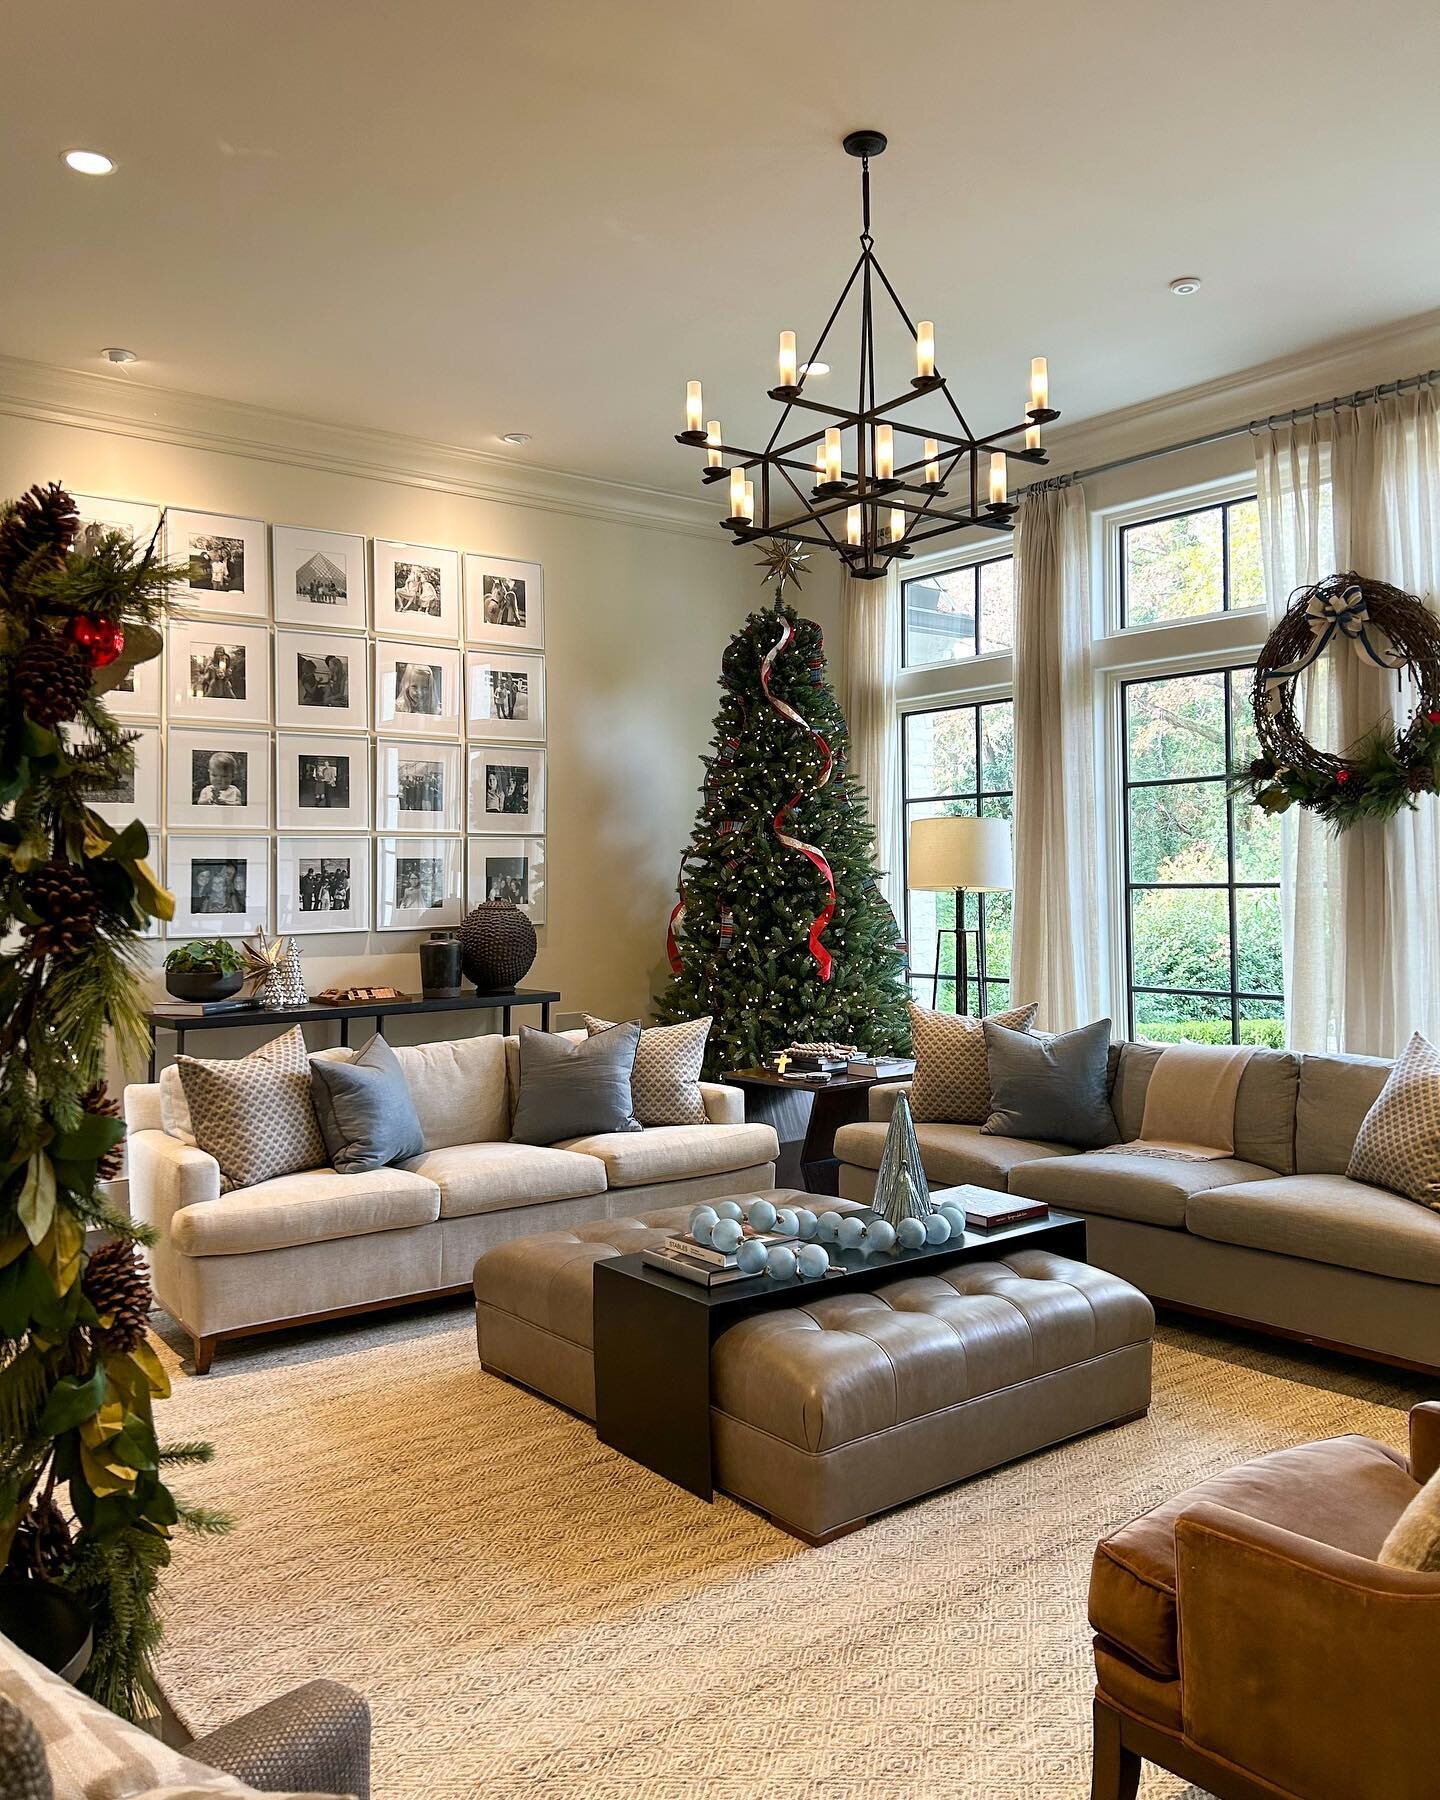 The perfect setting for a Christmas morning!
.
.
.
#interiordesign #atlantainteriordesign #holidaydecor #christmasdecor #christmastree